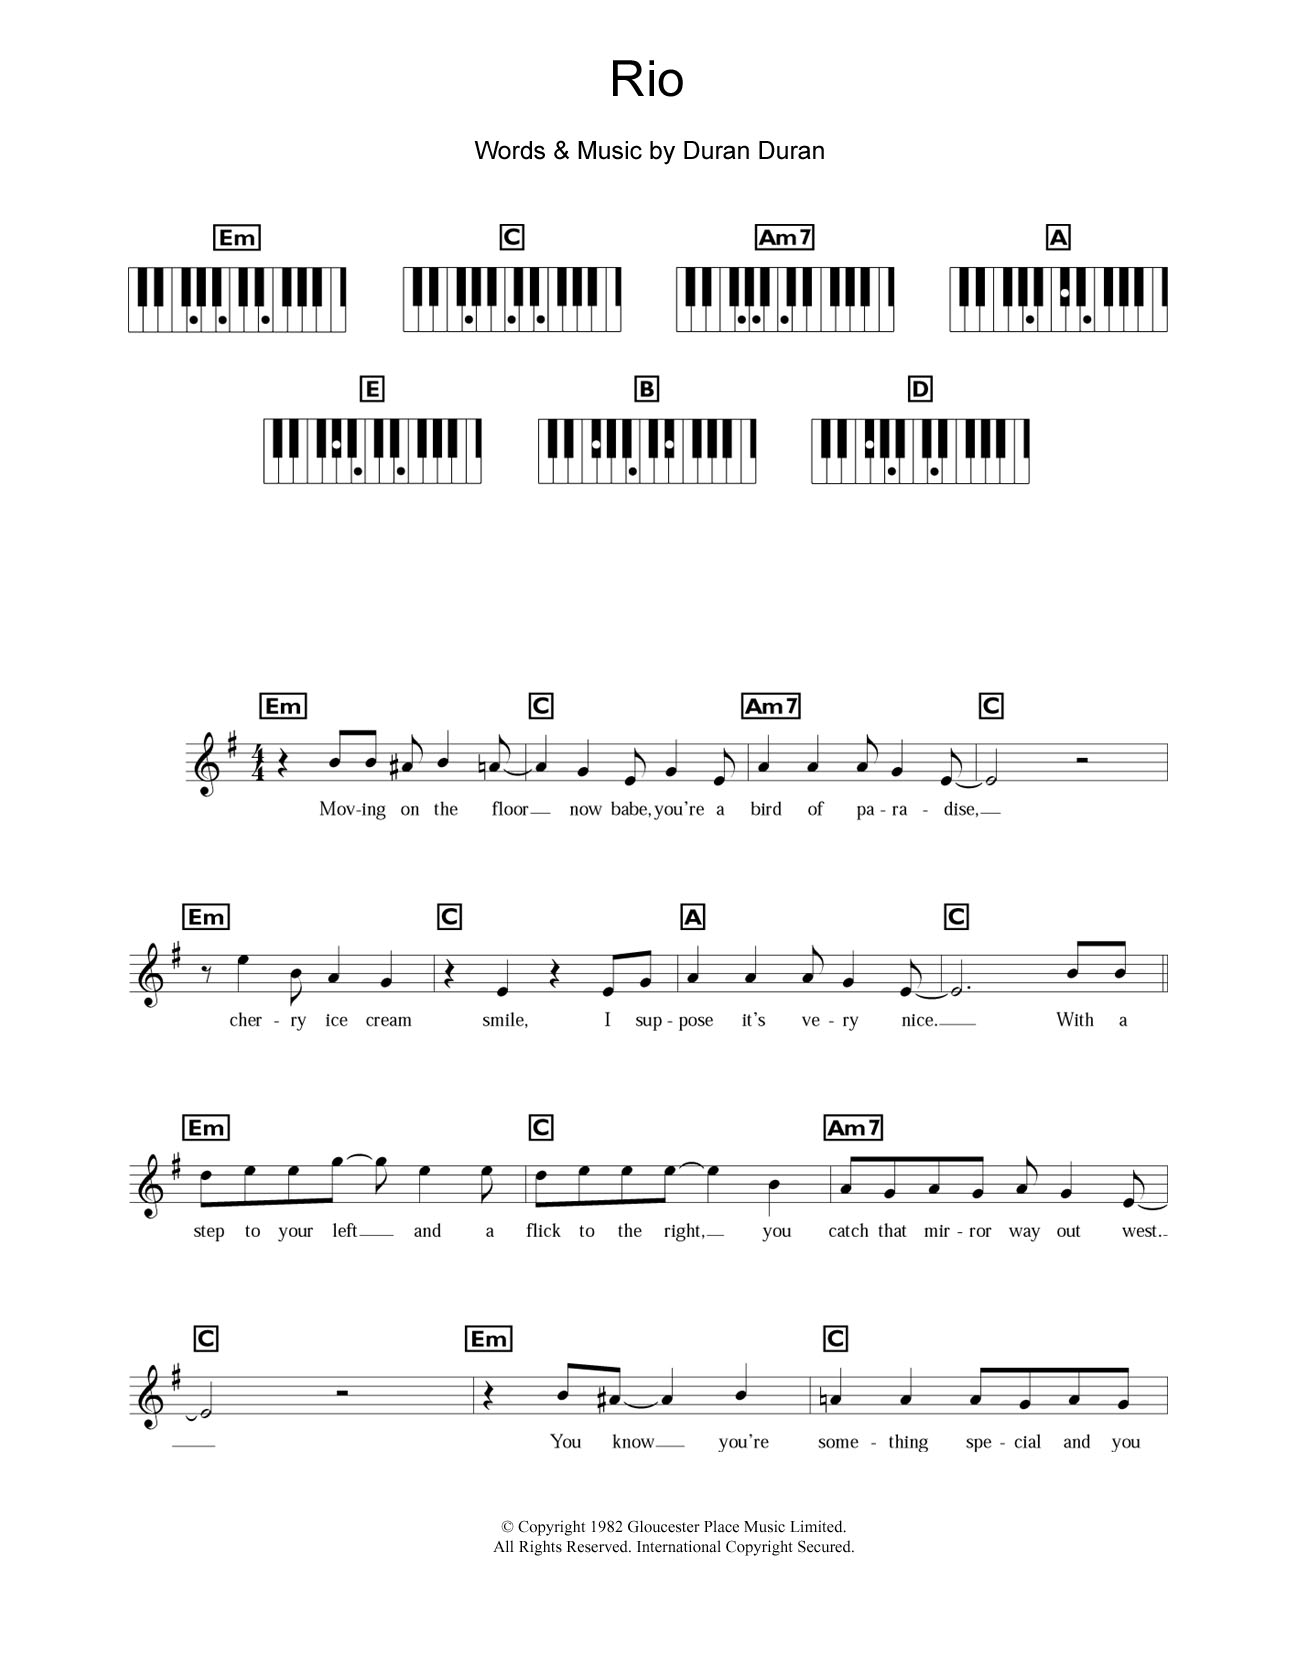 Duran Duran Rio Sheet Music Notes & Chords for Flute - Download or Print PDF